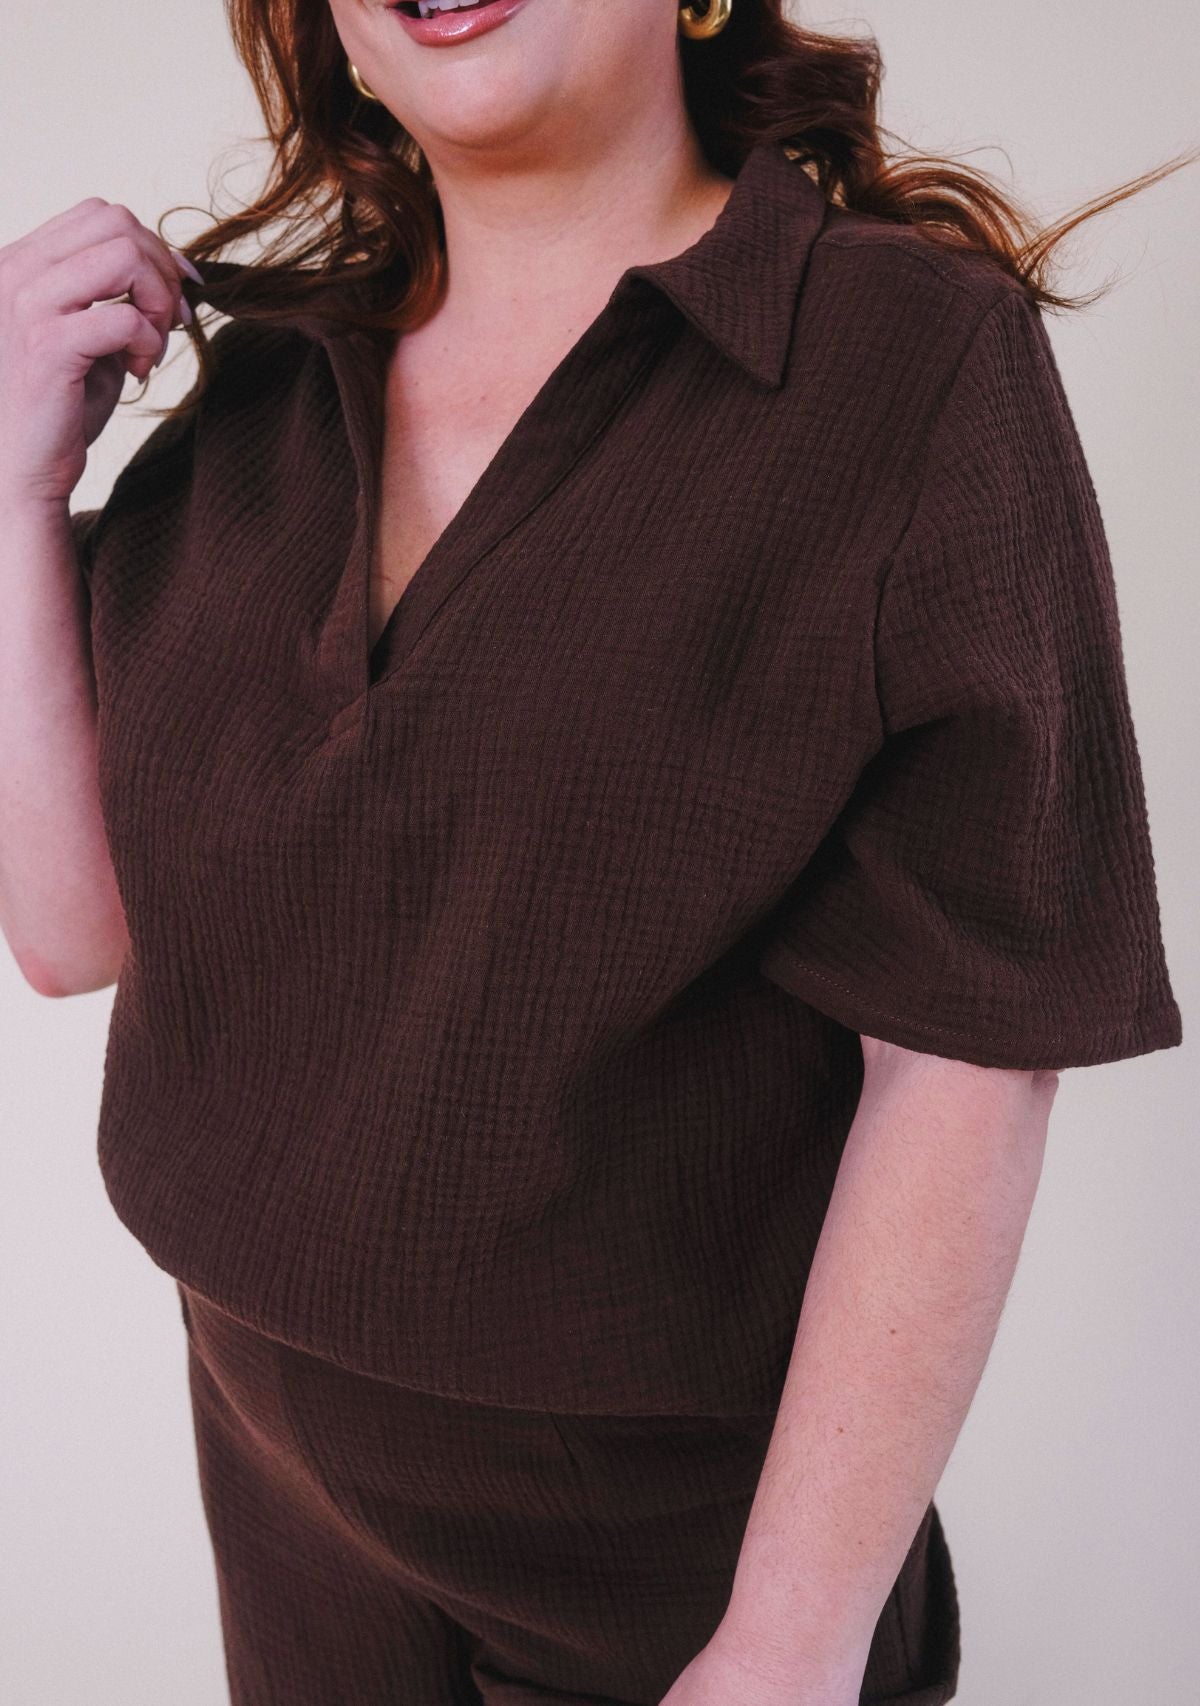 Poplinen x Simone Women's Organic Cotton Gauze Summer Shirt sizes XS-3X made ethically in California